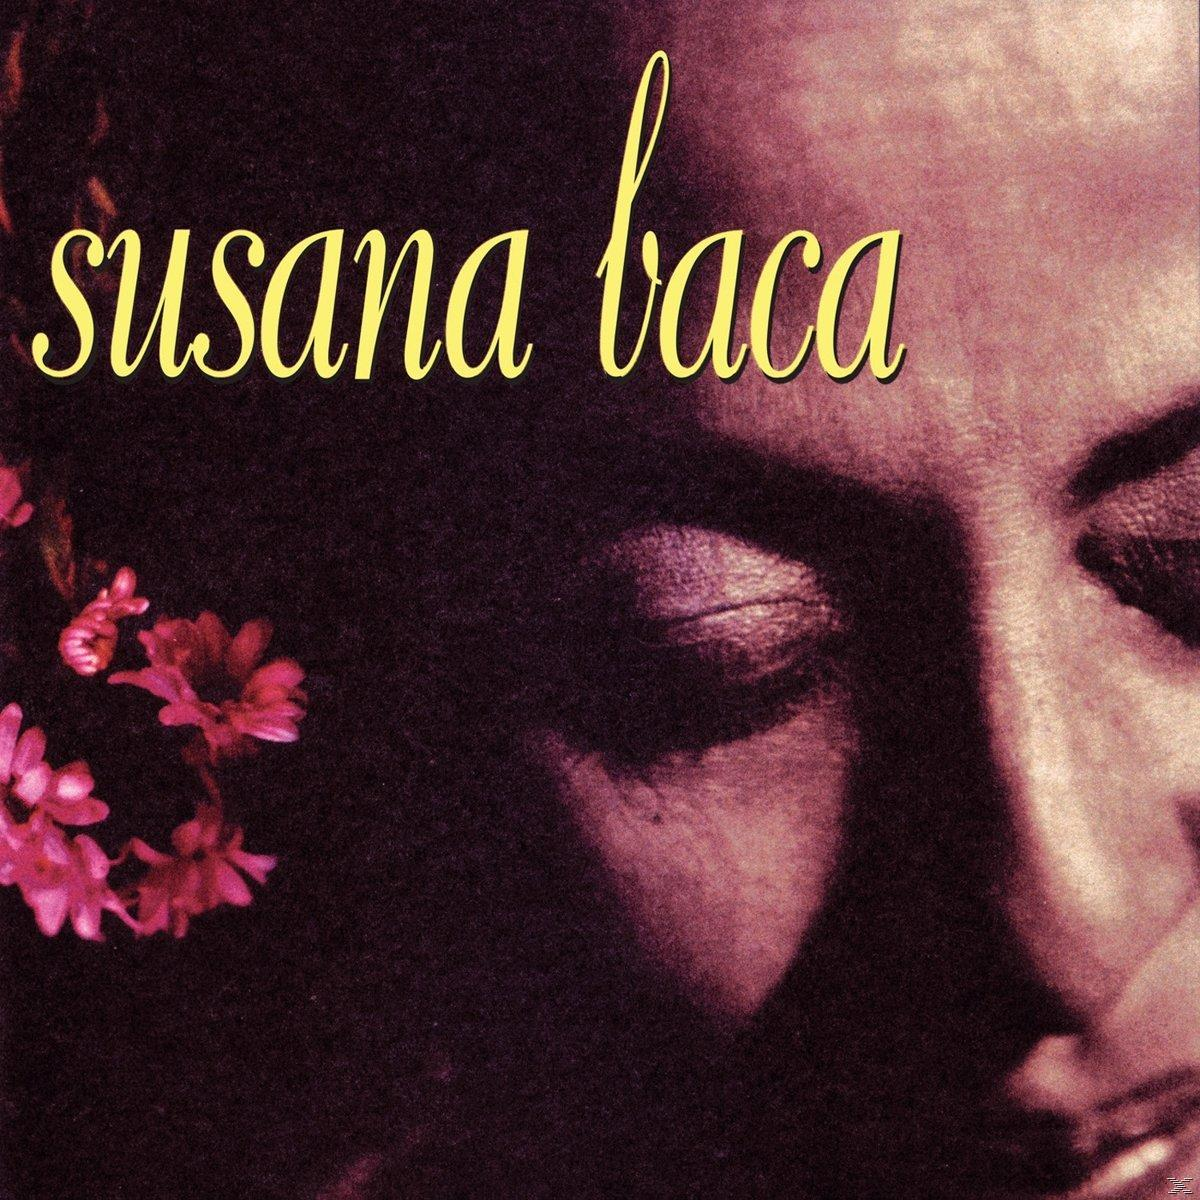 Susana - Susana (Vinyl) Baca Baca -